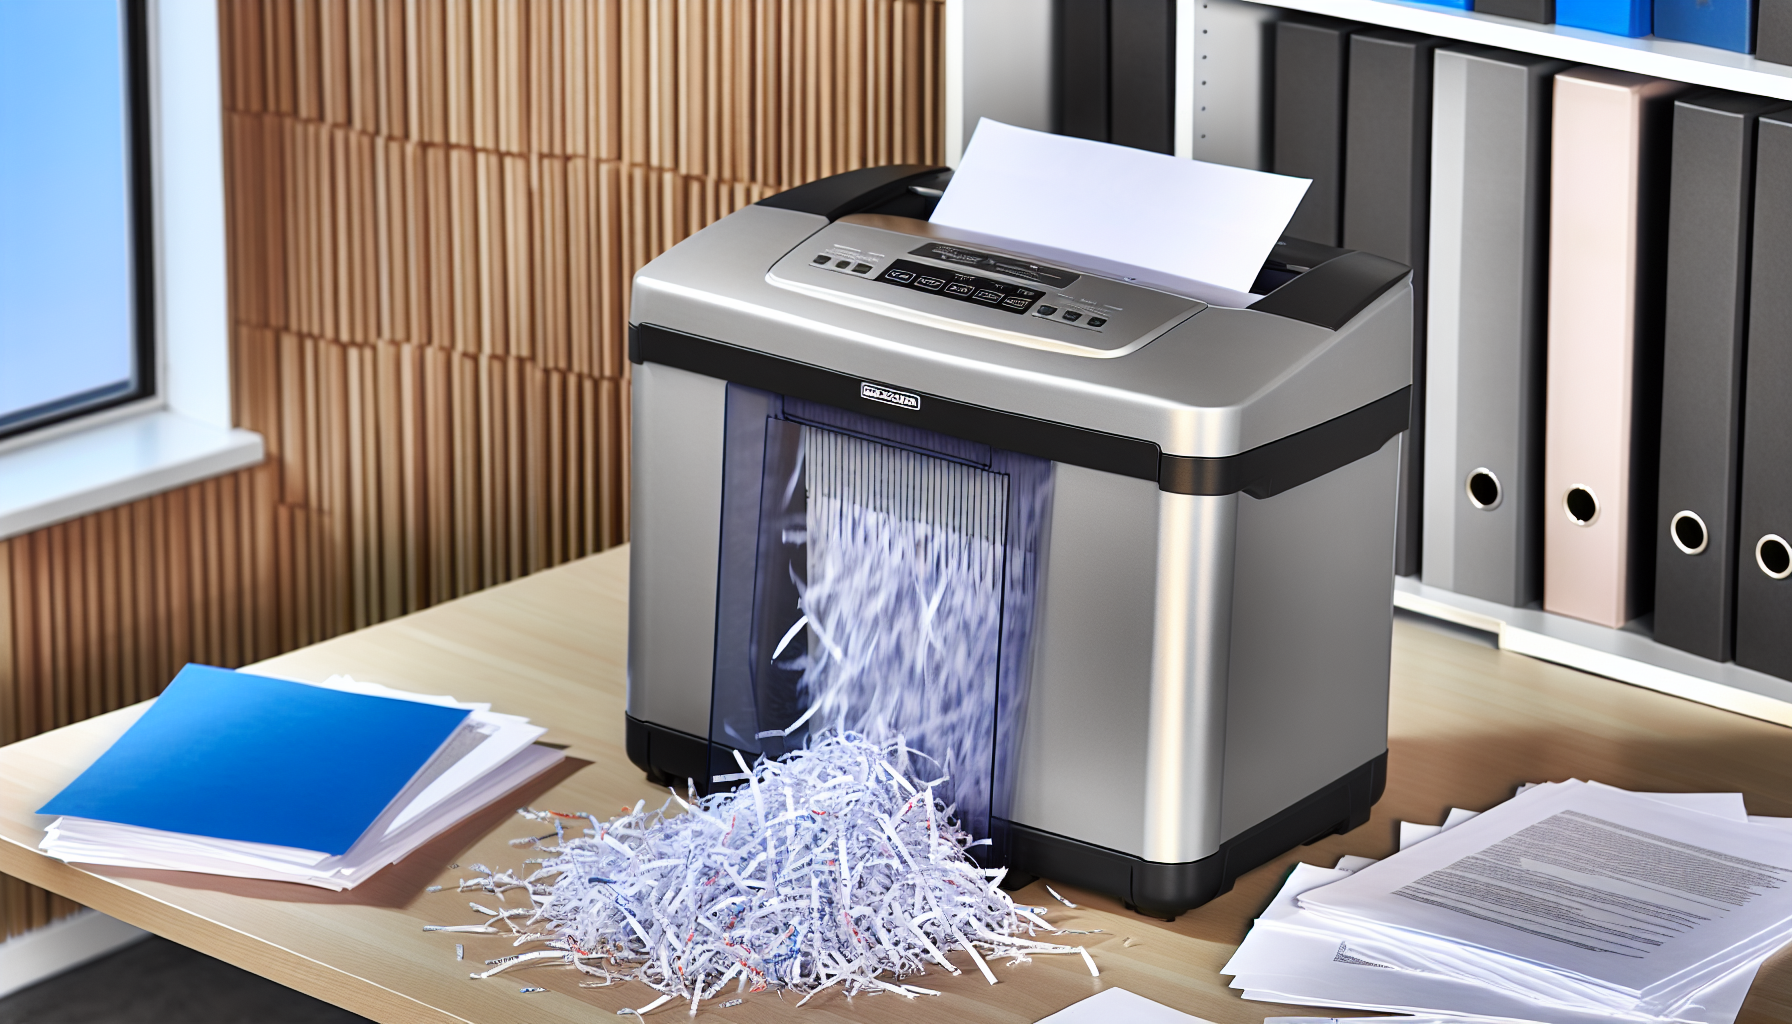 Shredder machine destroying documents